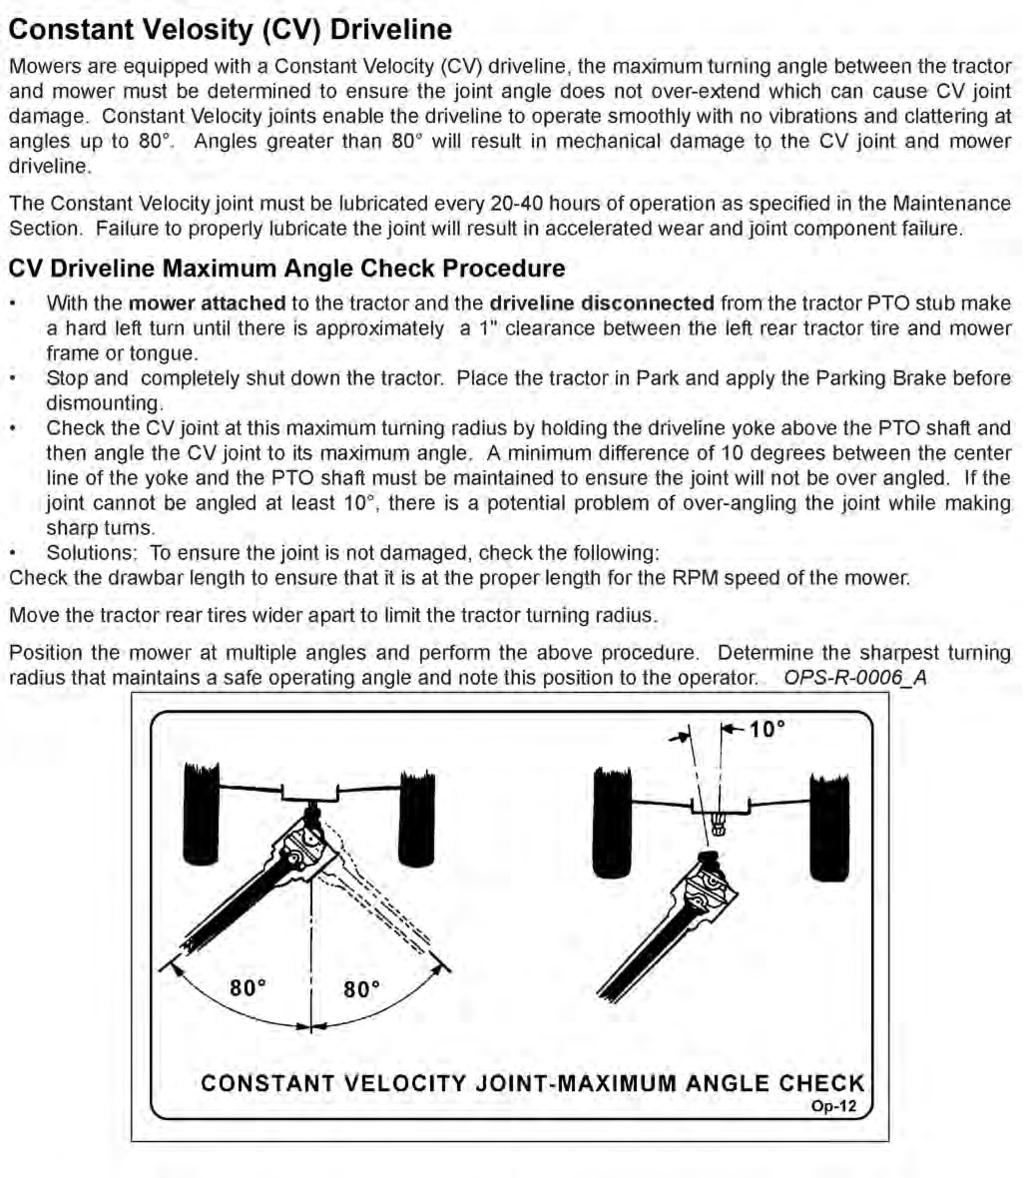 Constant Velocity (CV) Driveline OPERATION